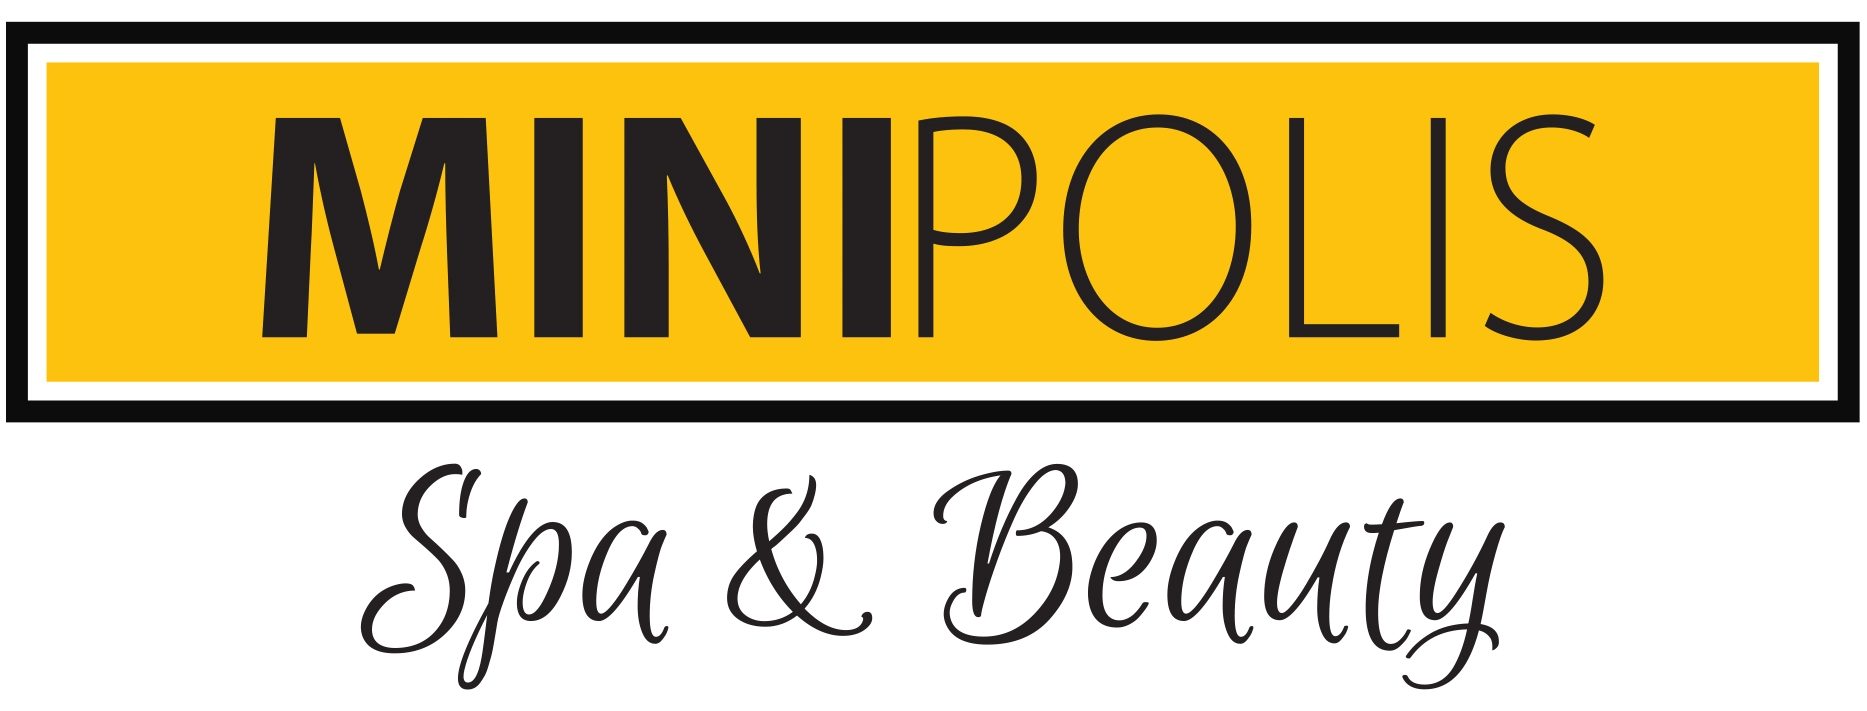 Minipolis logo